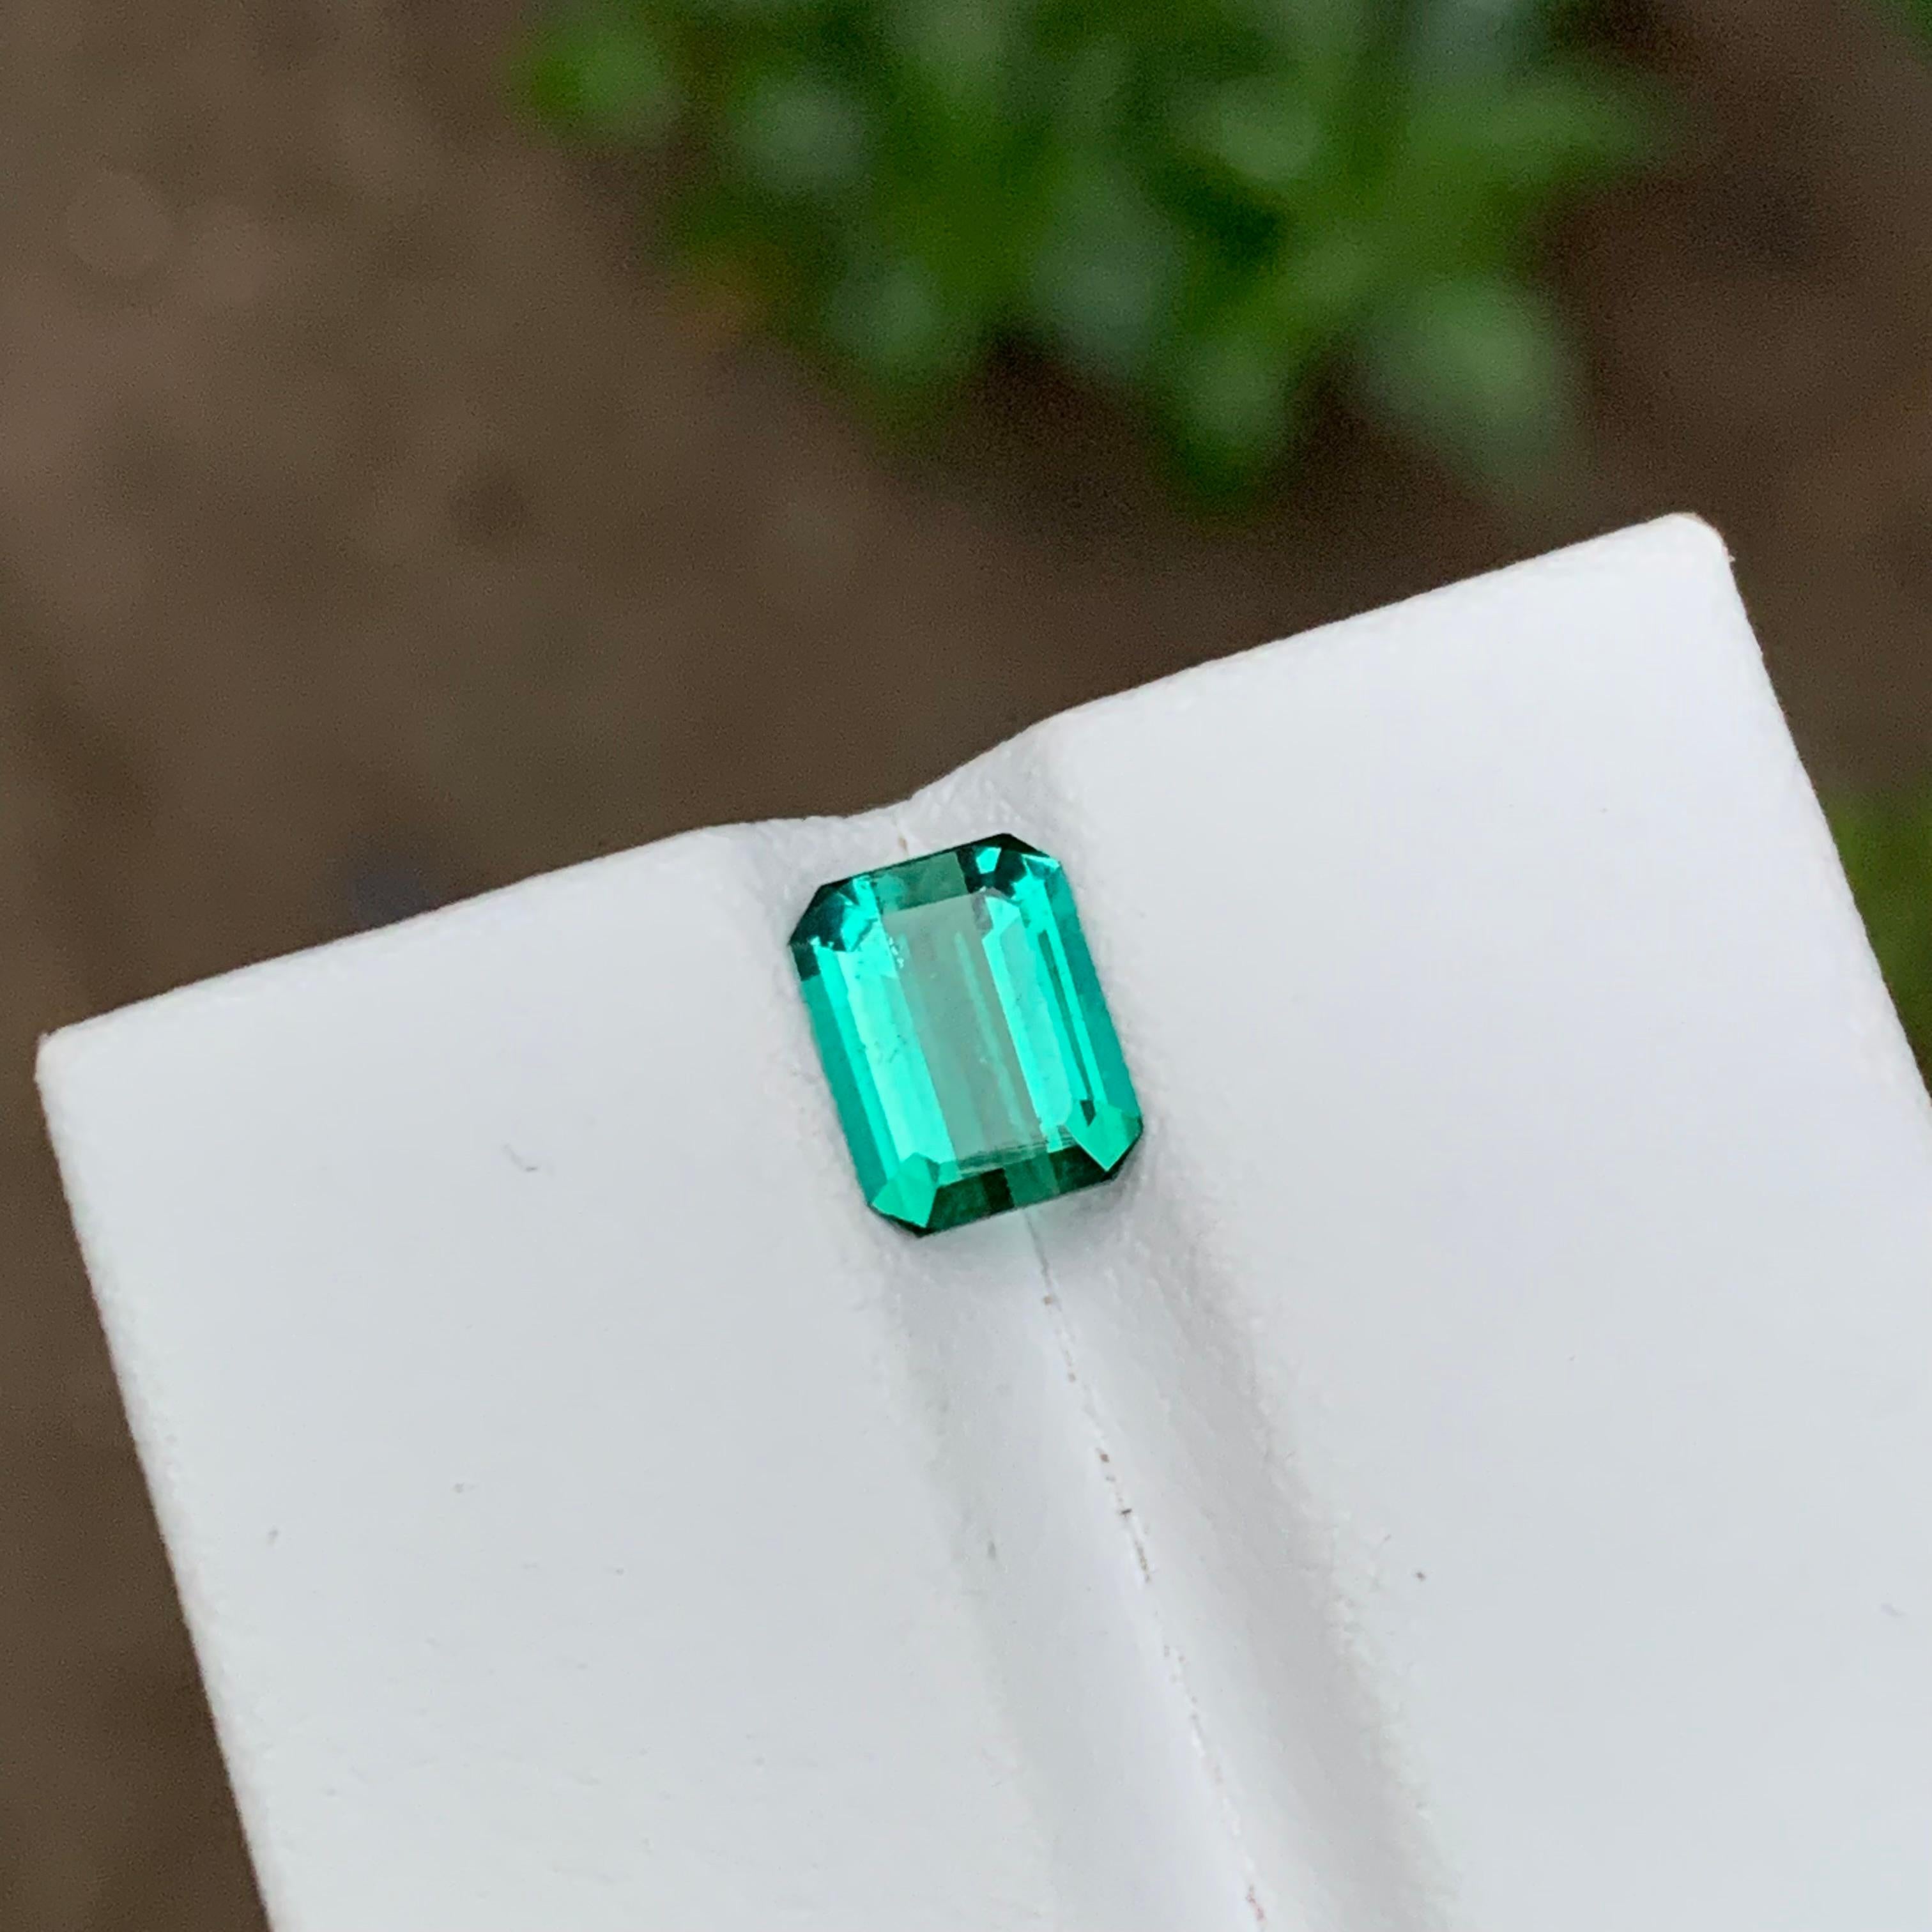 Rare Vibrant Bluish Neon Green Tourmaline Gemstone, 1.35 Ct Emerald Cut for Ring For Sale 4